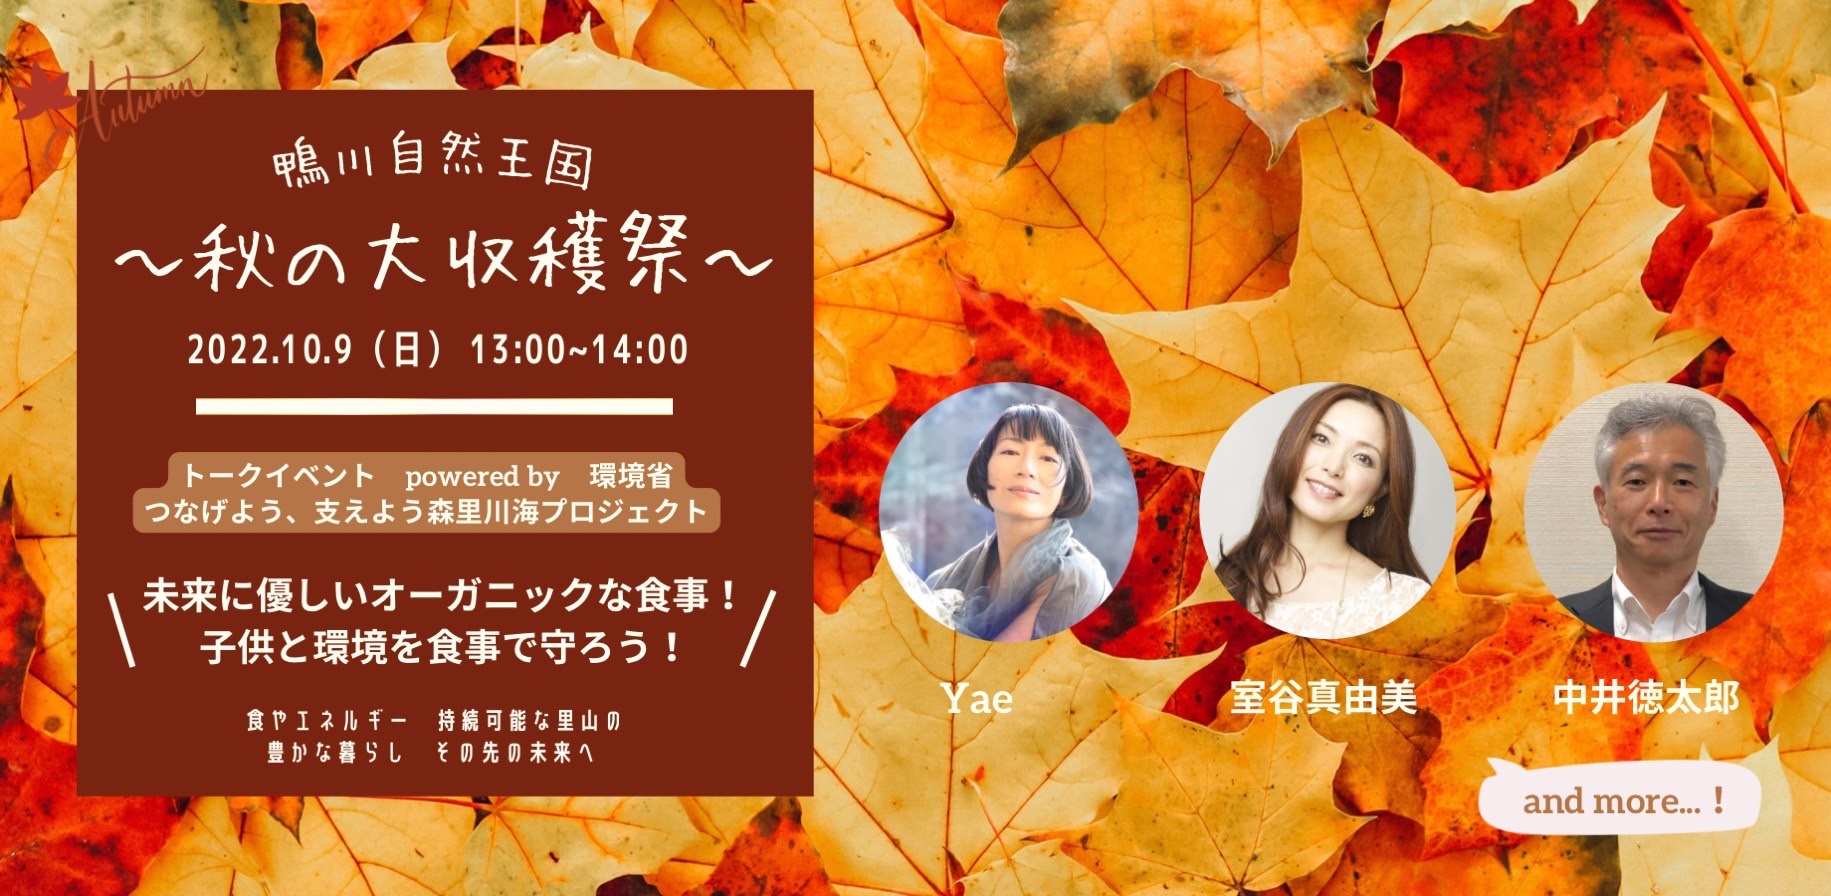 Autumn Harvest Festival 2022